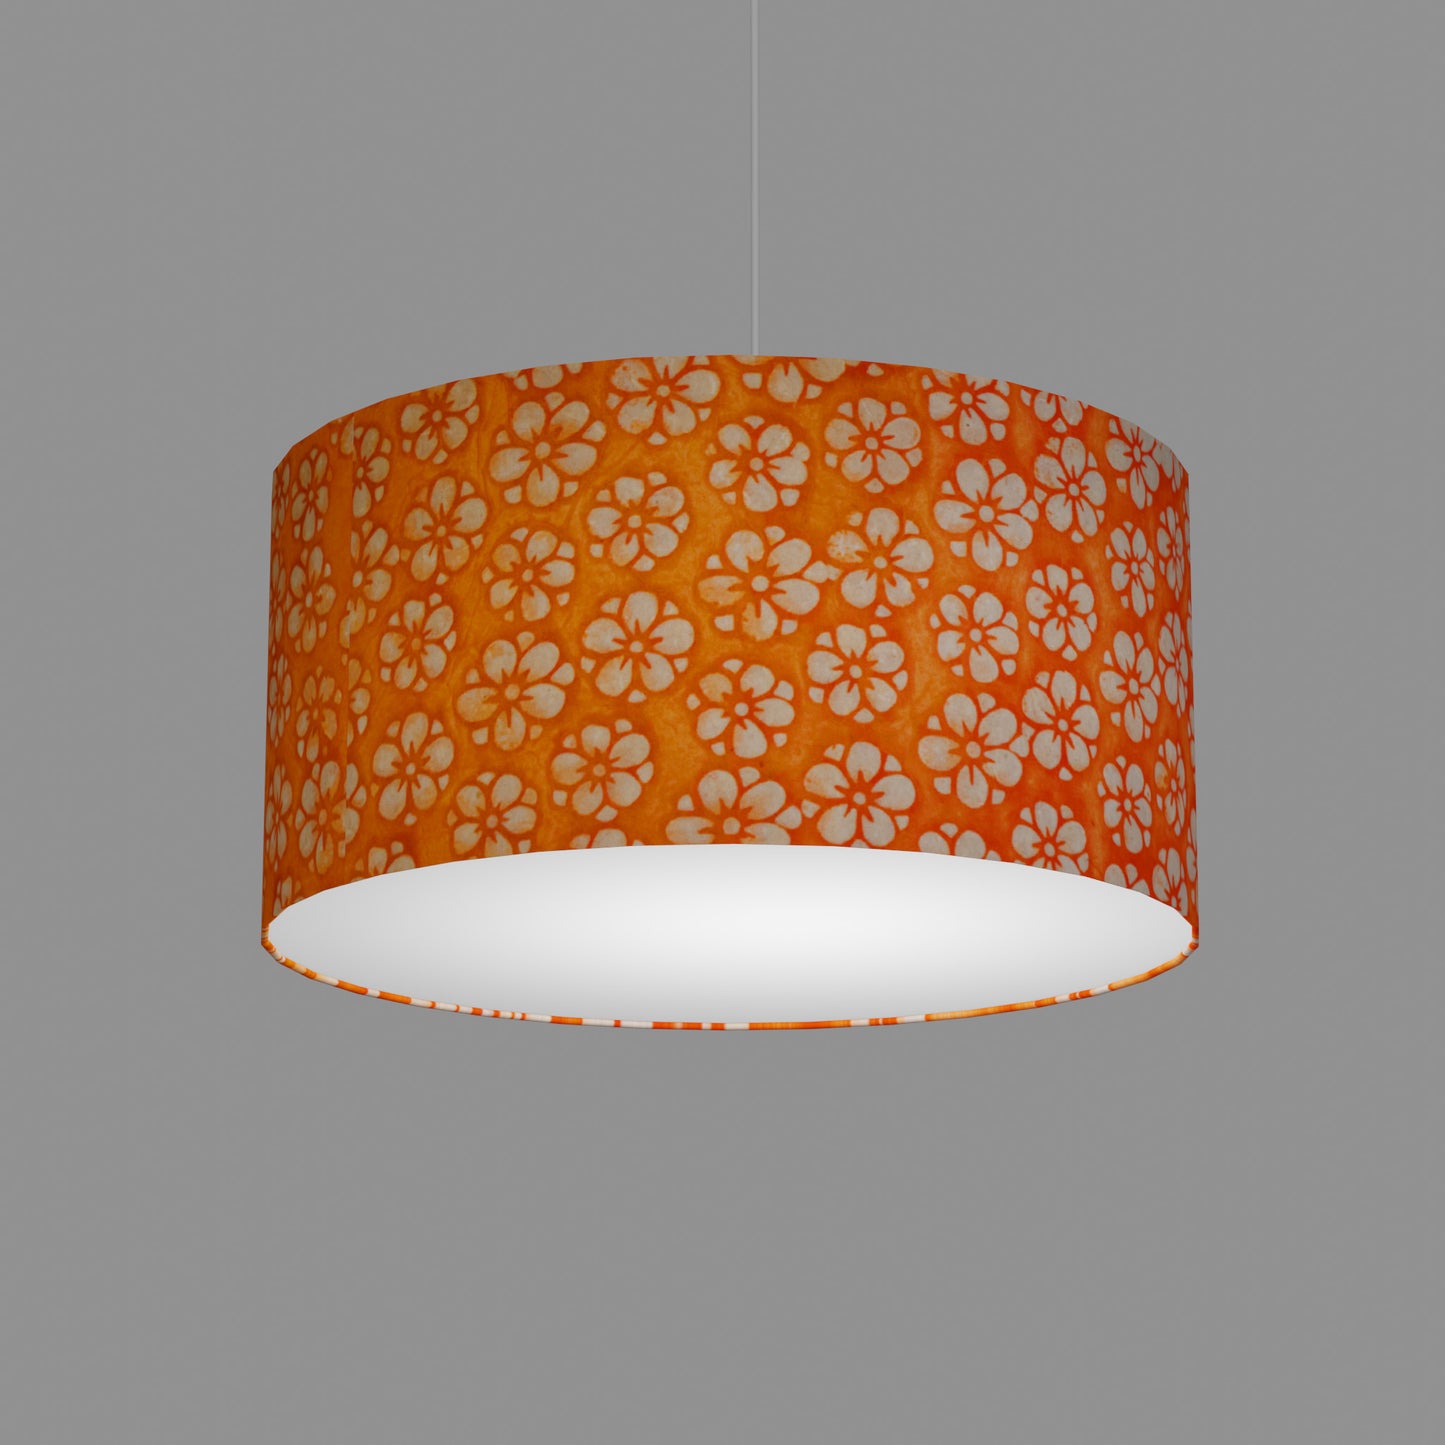 Drum Lamp Shade - P94 - Batik Star Flower on Orange, 50cm(d) x 25cm(h)